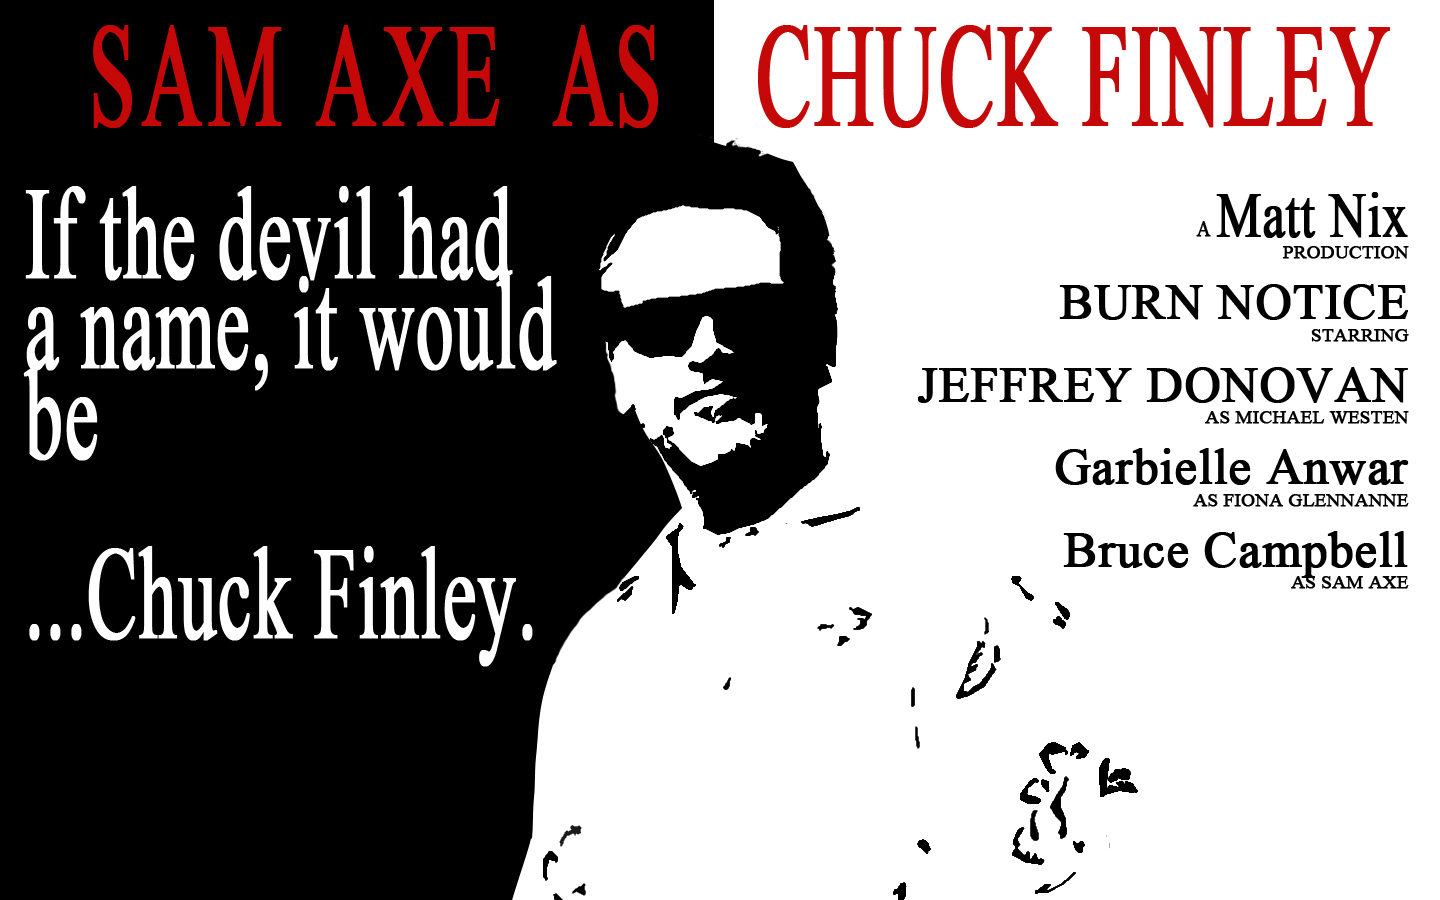 Sam-Axe-Chuck-Finley-Wallpaper-burn-notice-4396774-1440-900.jpg